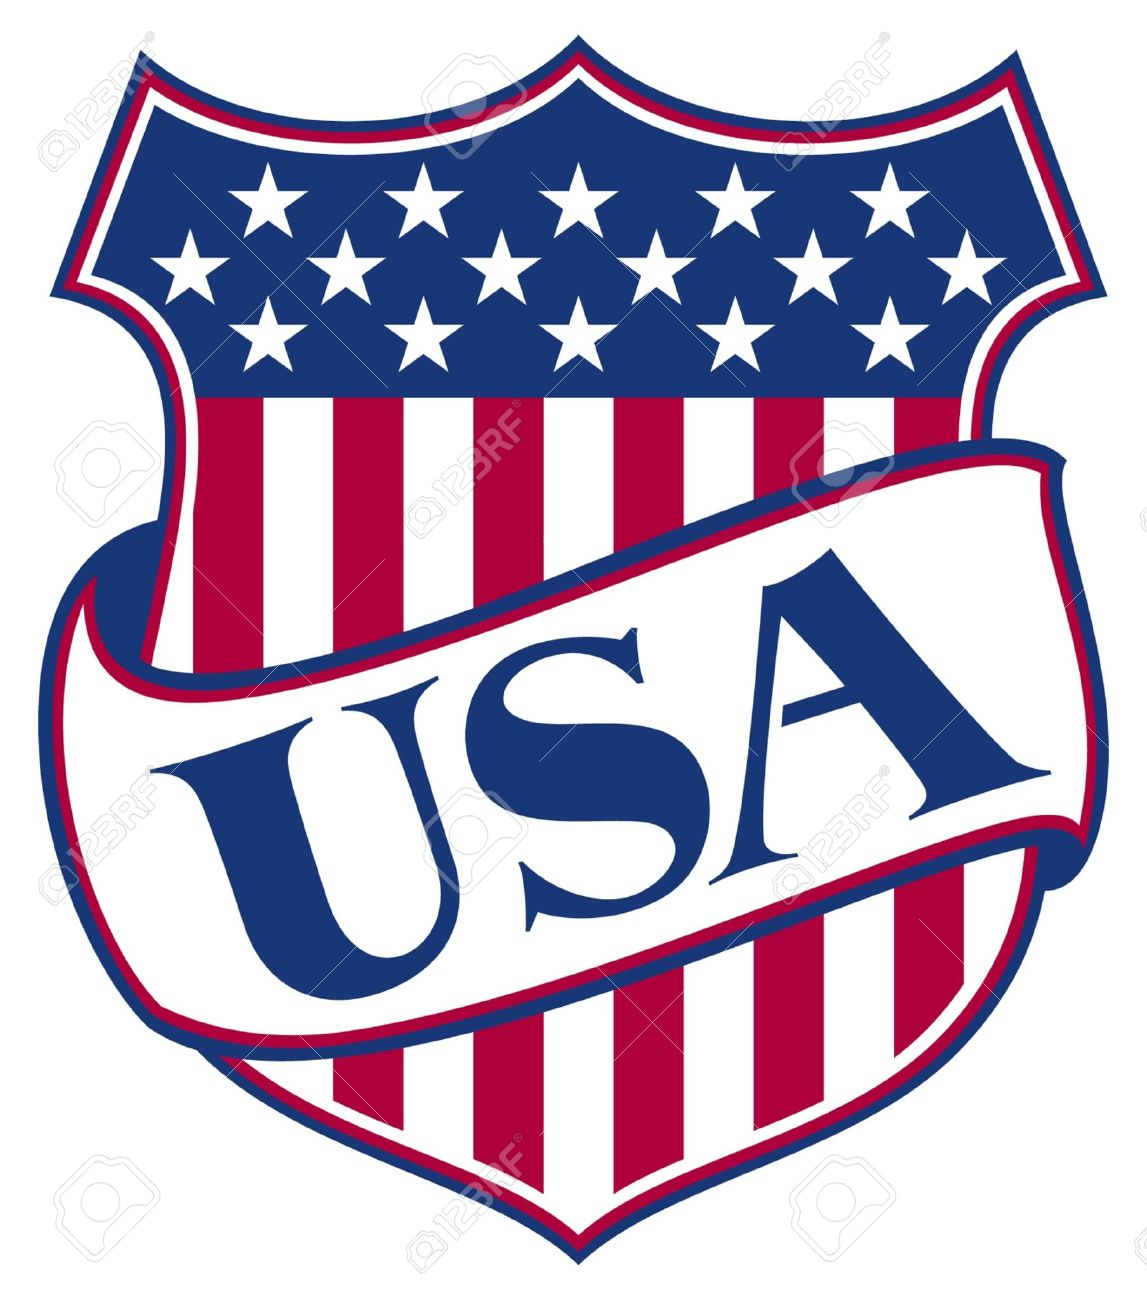 UNITED STATES OF AMERICA shield USA.